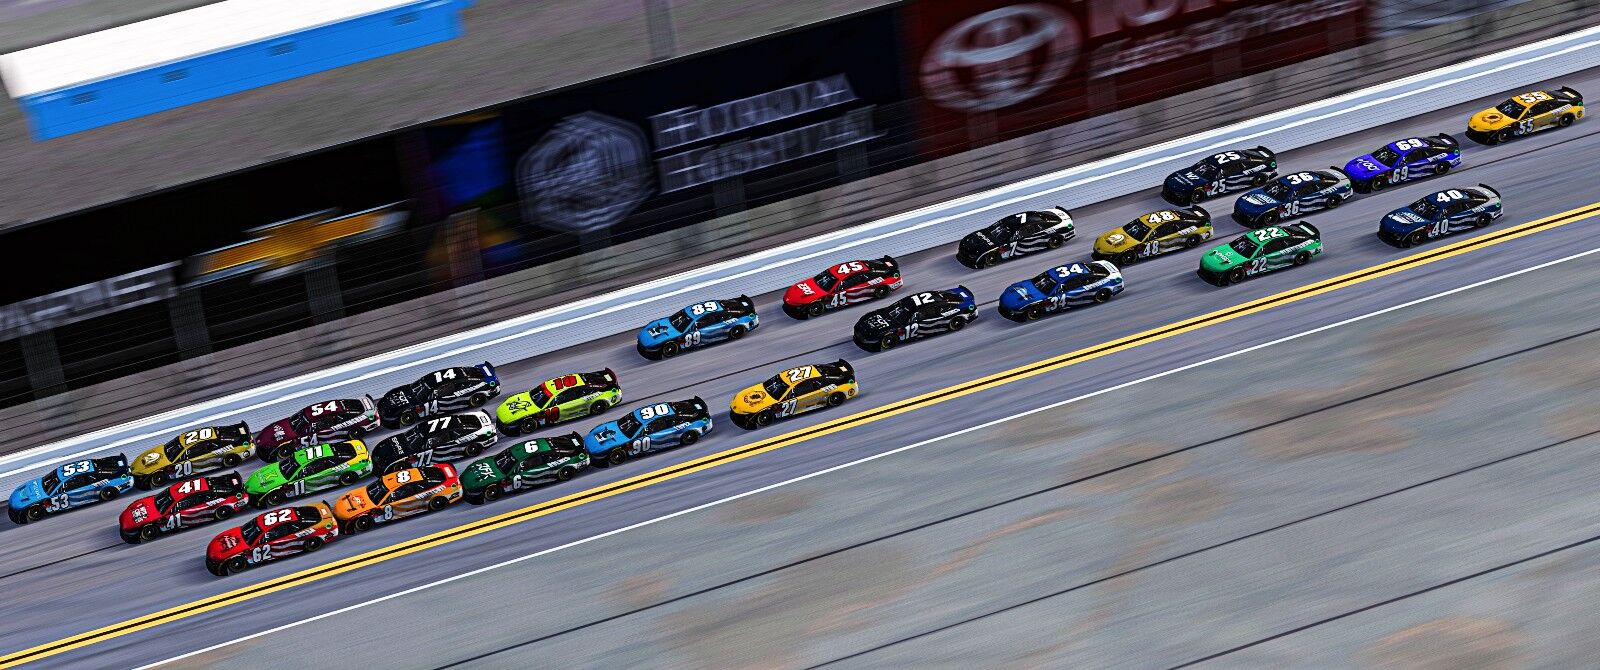 A line of NASCAR stock cars racing.